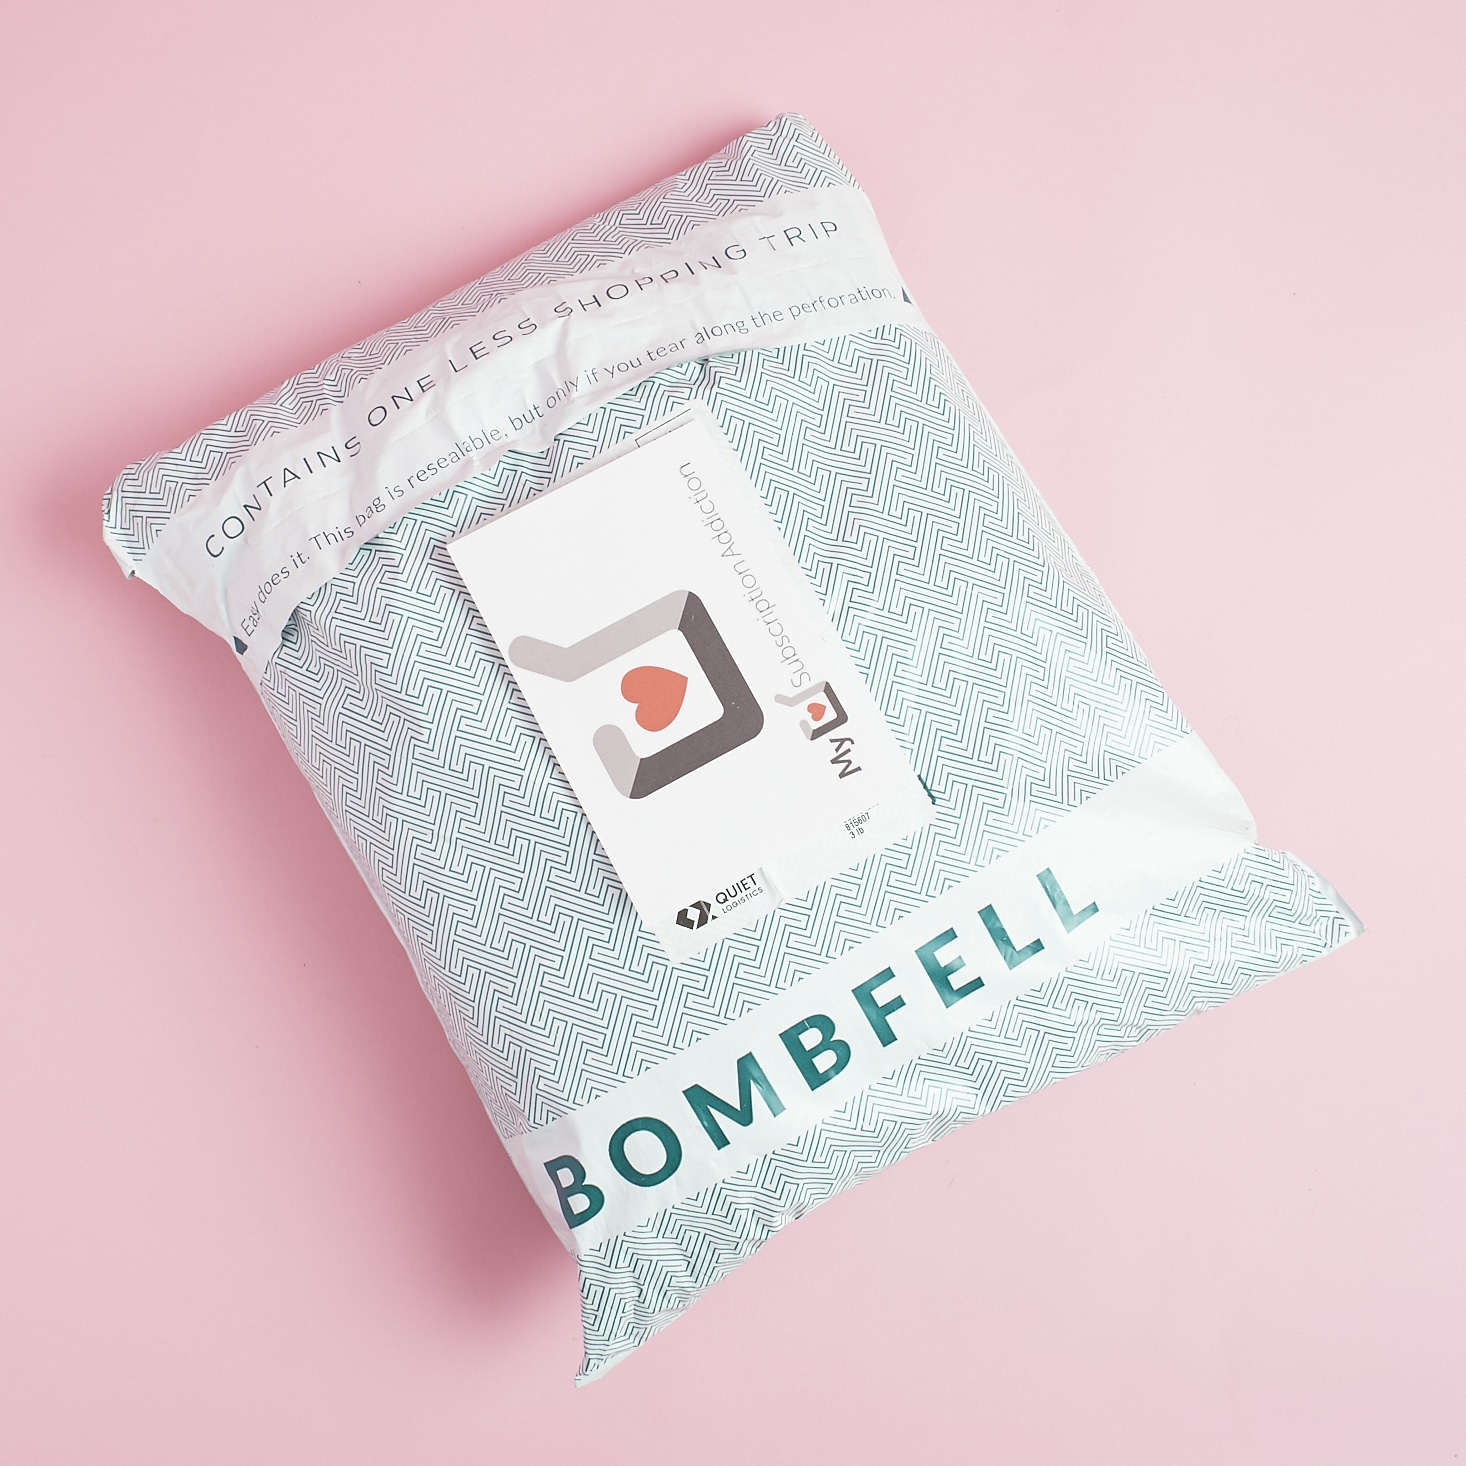 Bombfell Men’s Clothing Box Review + Coupon – June 2017